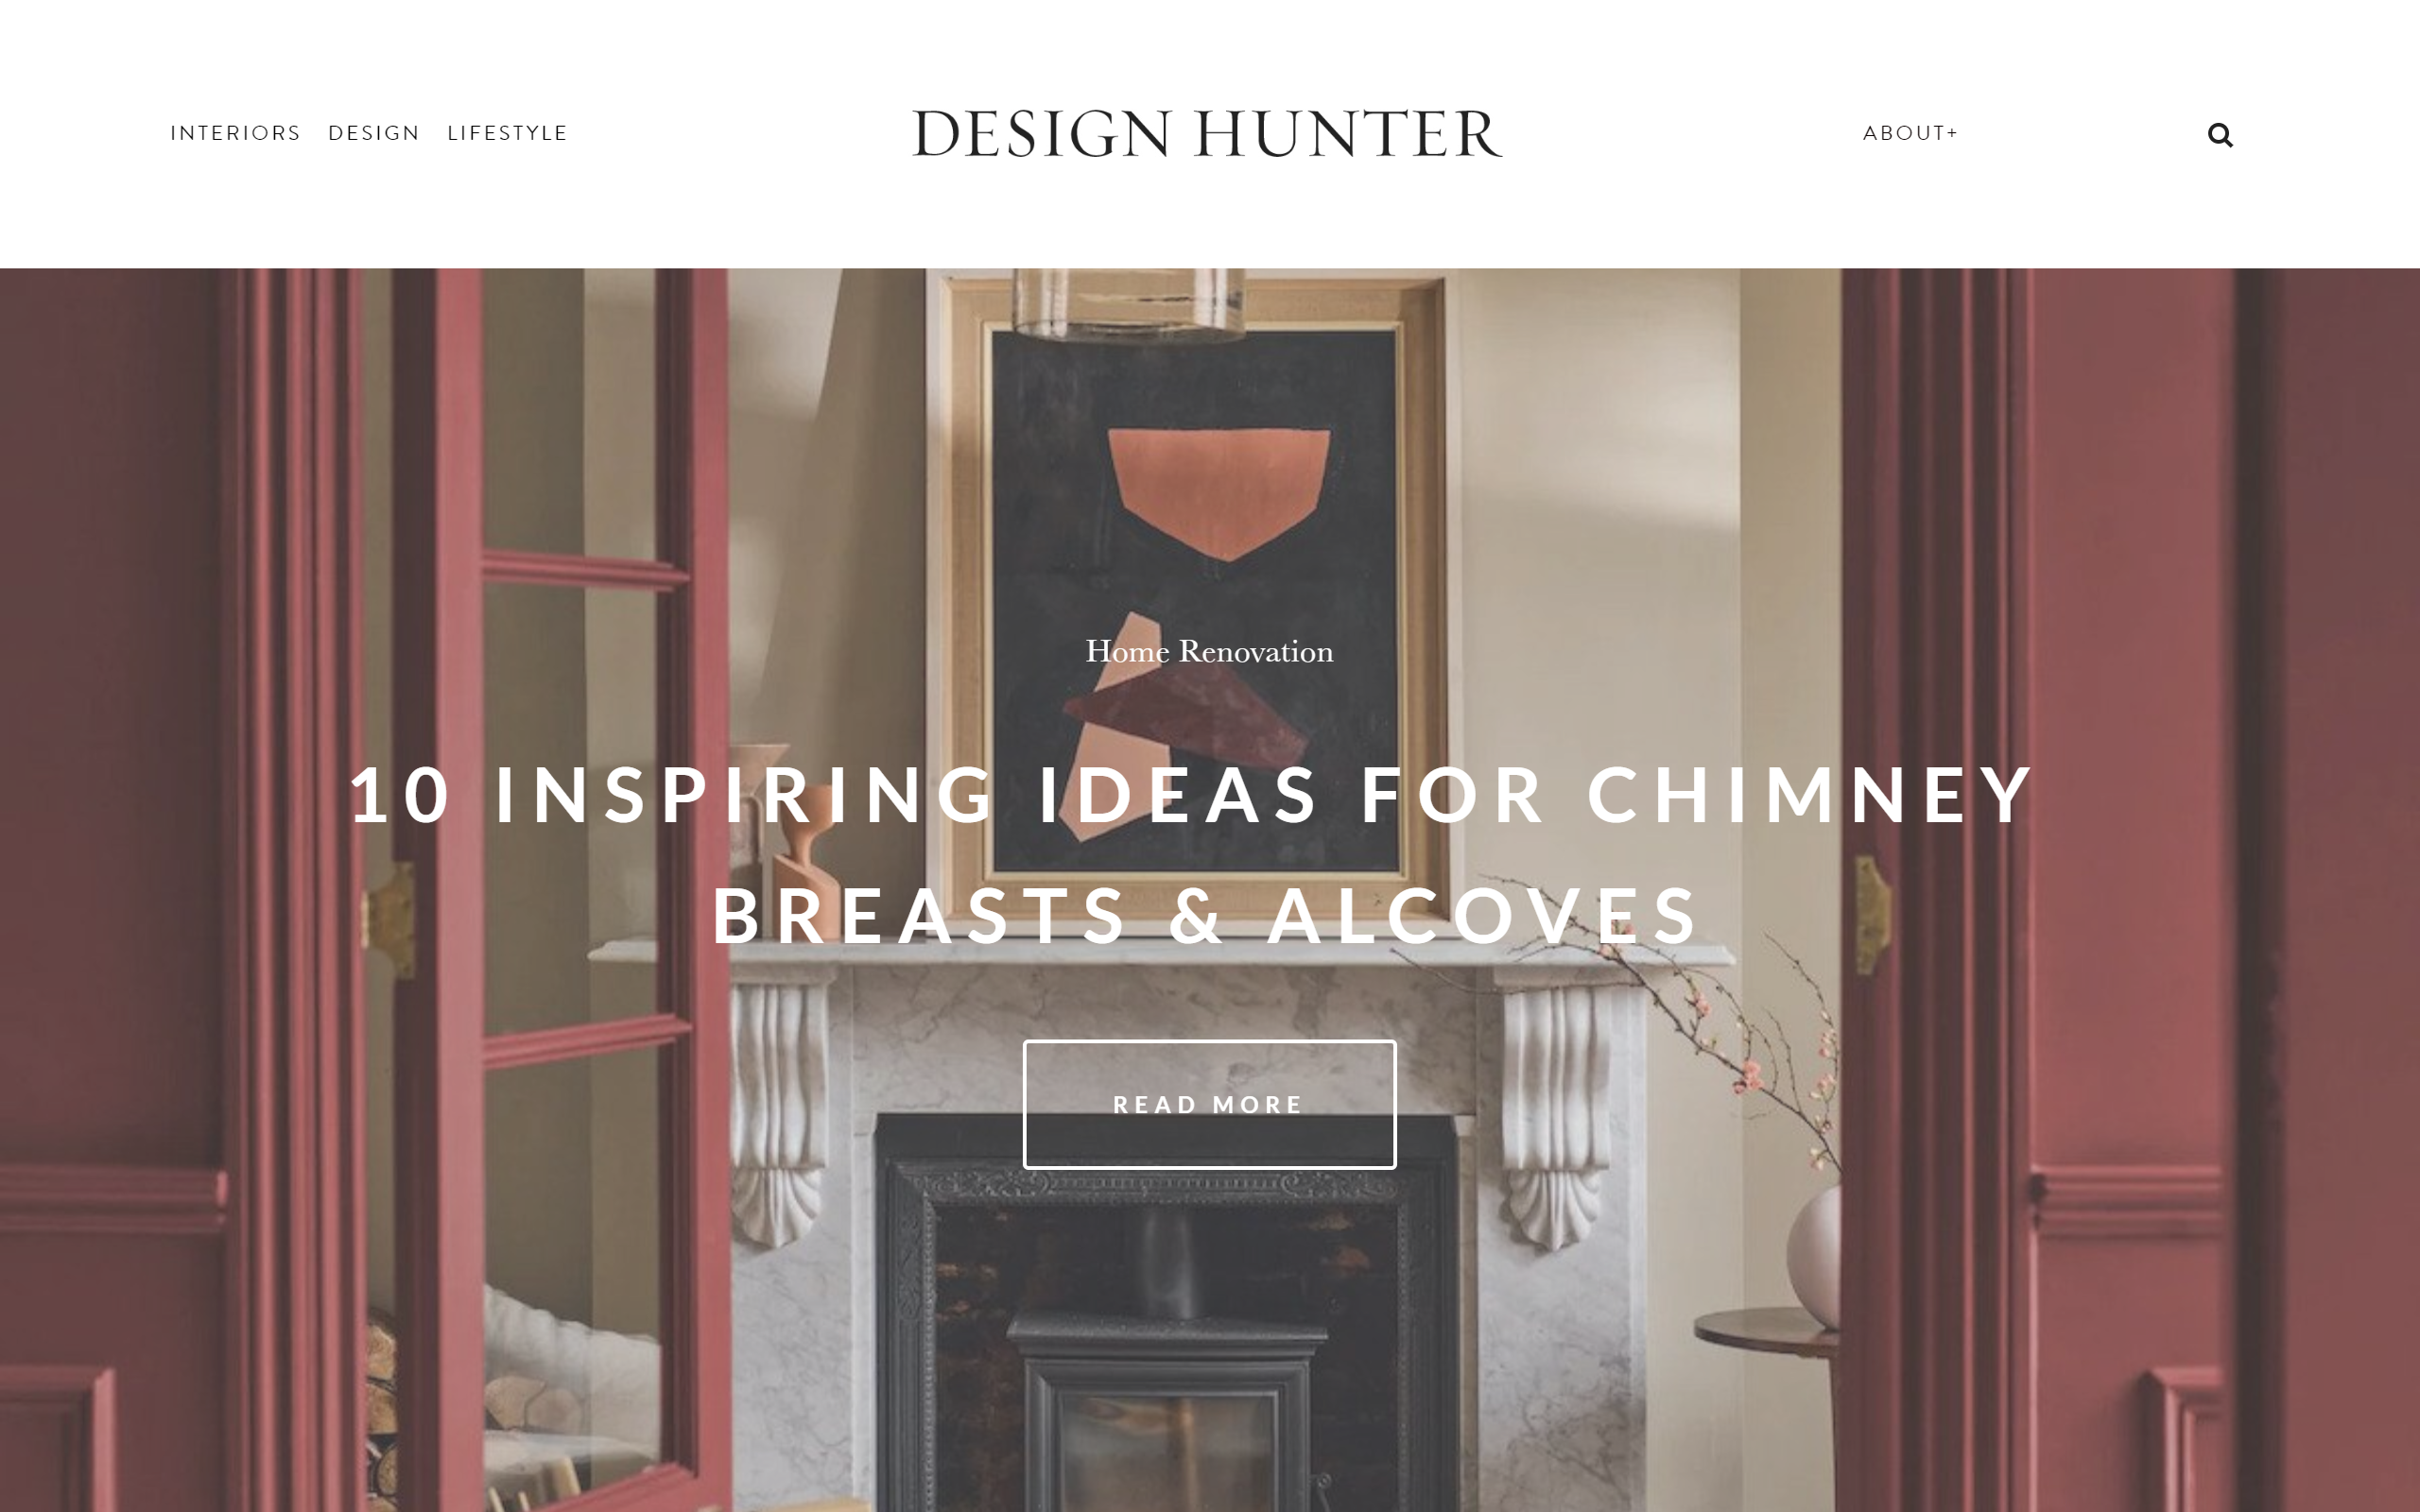 Design Hunter interior design blogs